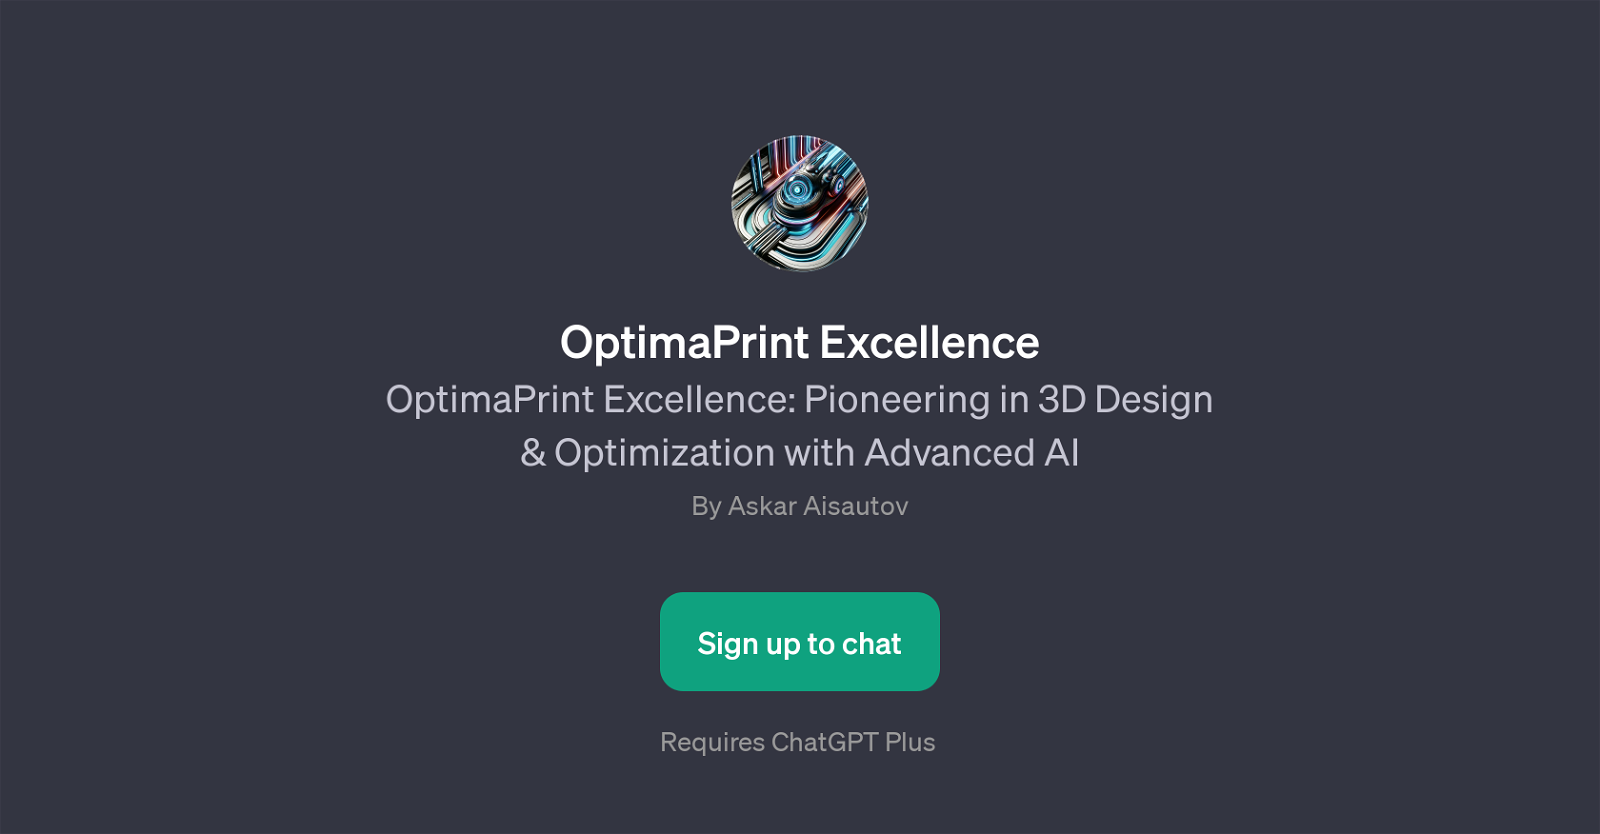 OptimaPrint Excellence website